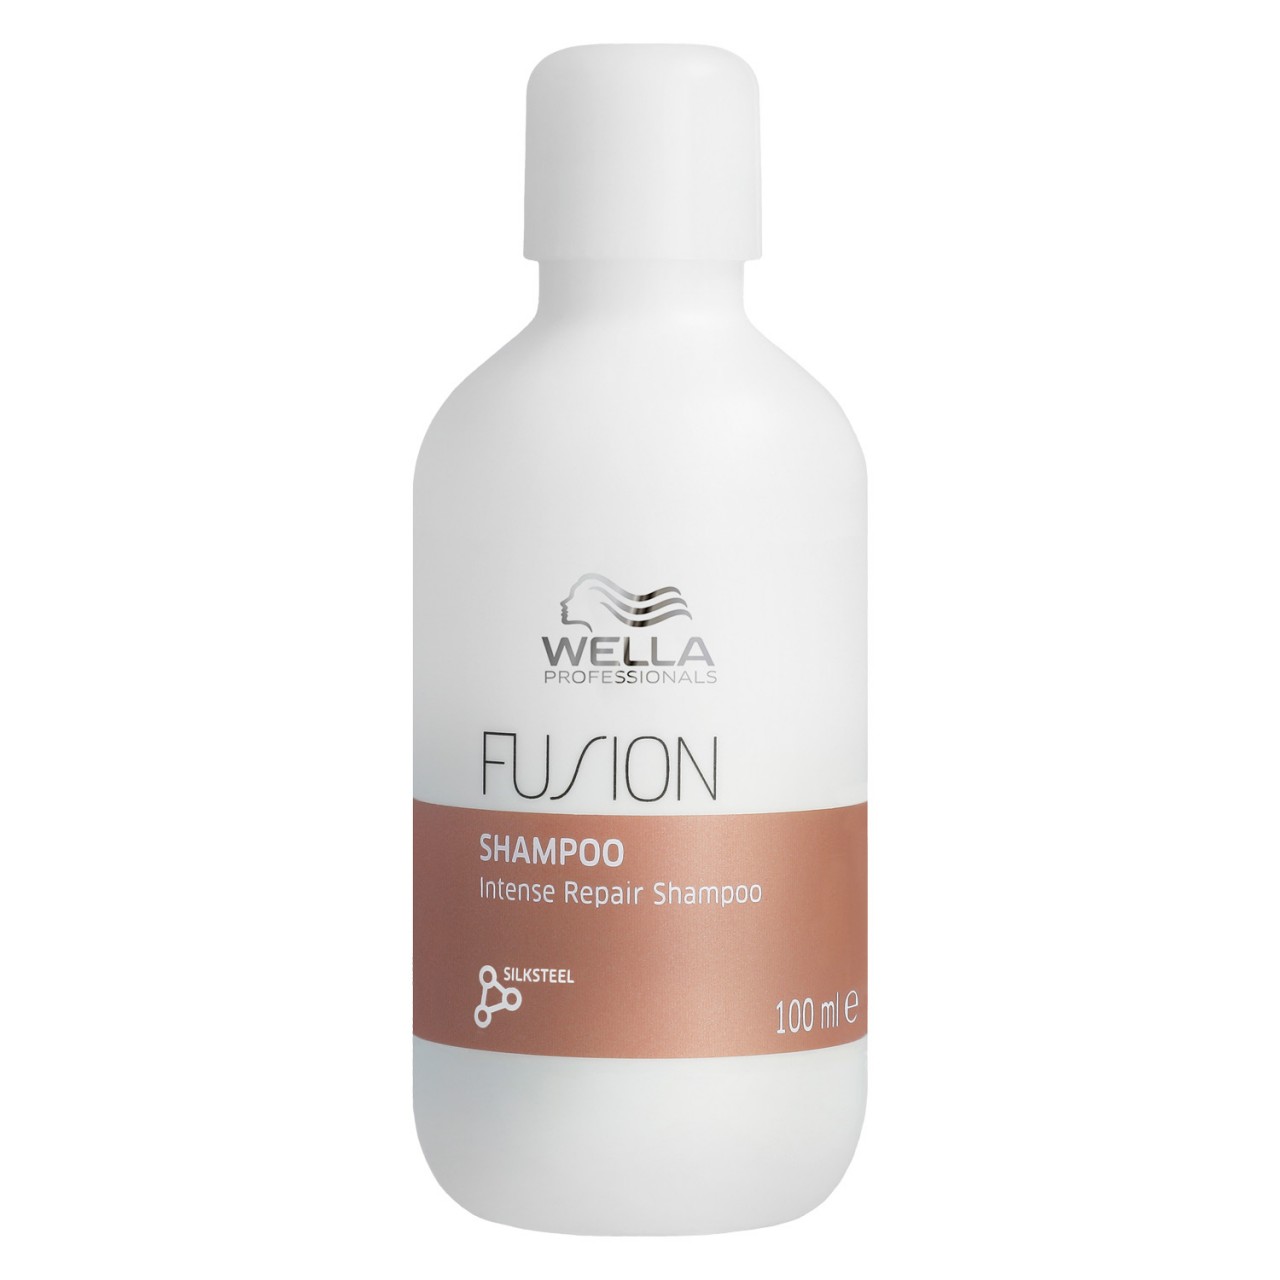 Fusion - Intense Repair Shampoo von Wella